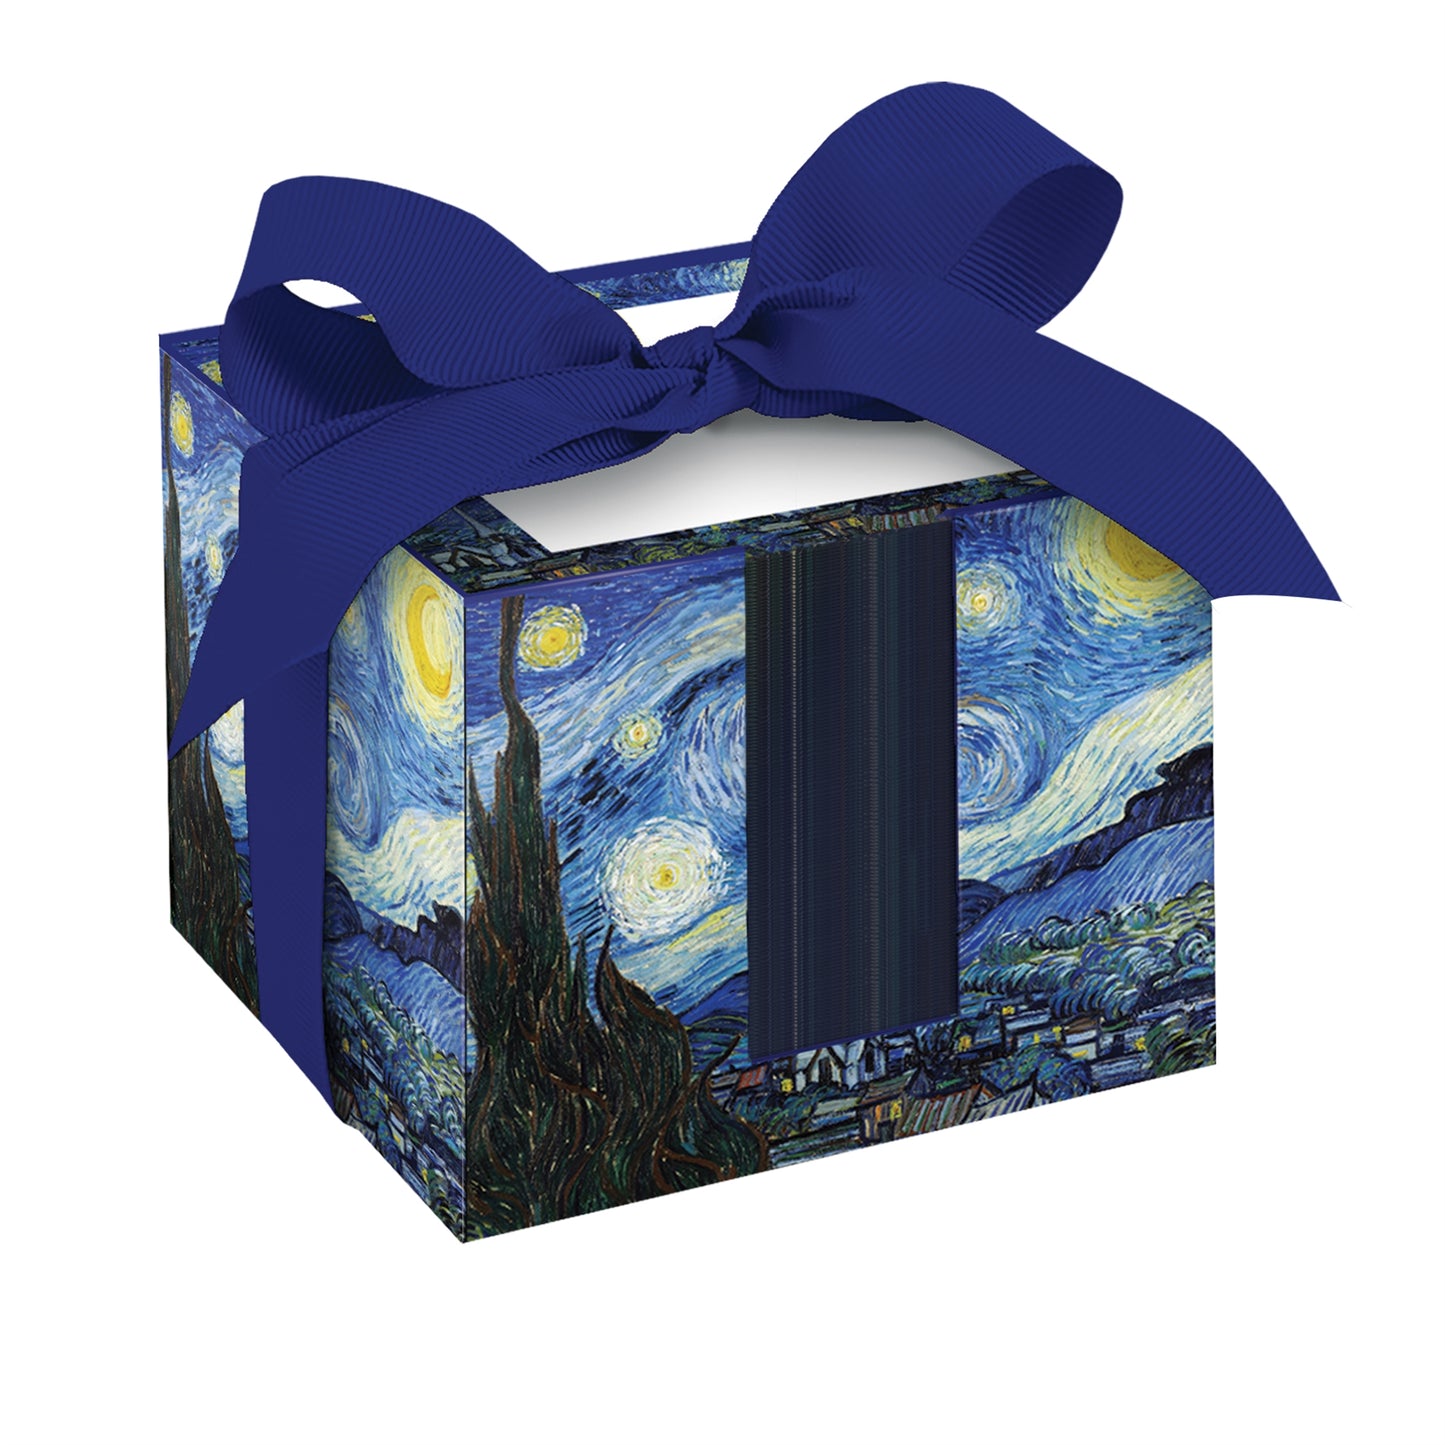 Note Cube: van Gogh's "Starry Night"